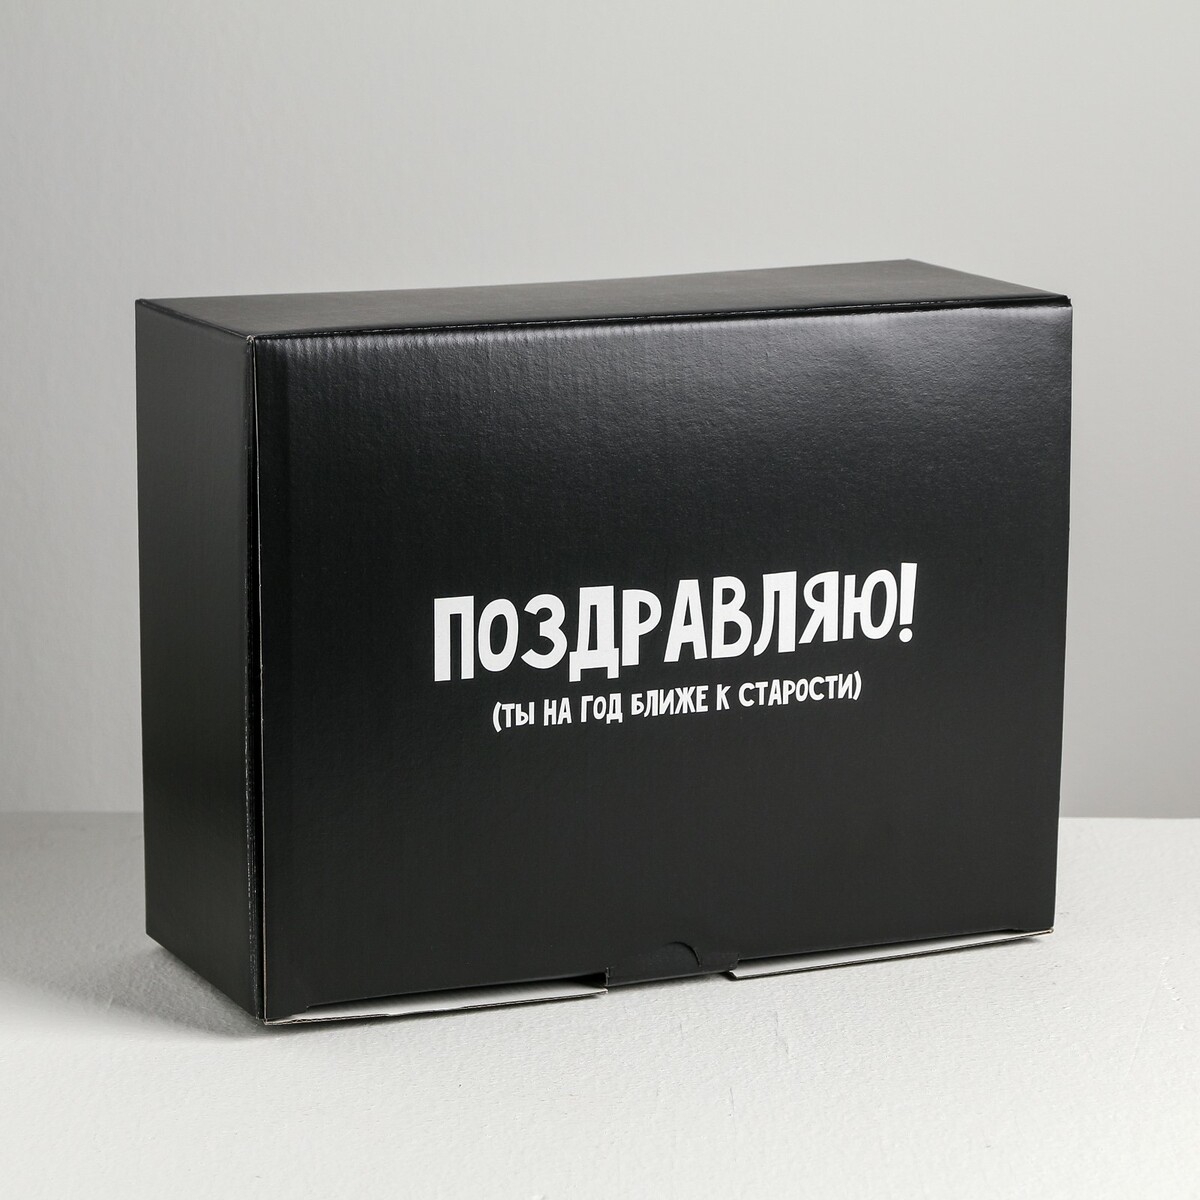 Коробка‒пенал, упаковка подарочная, коробка‒пенал